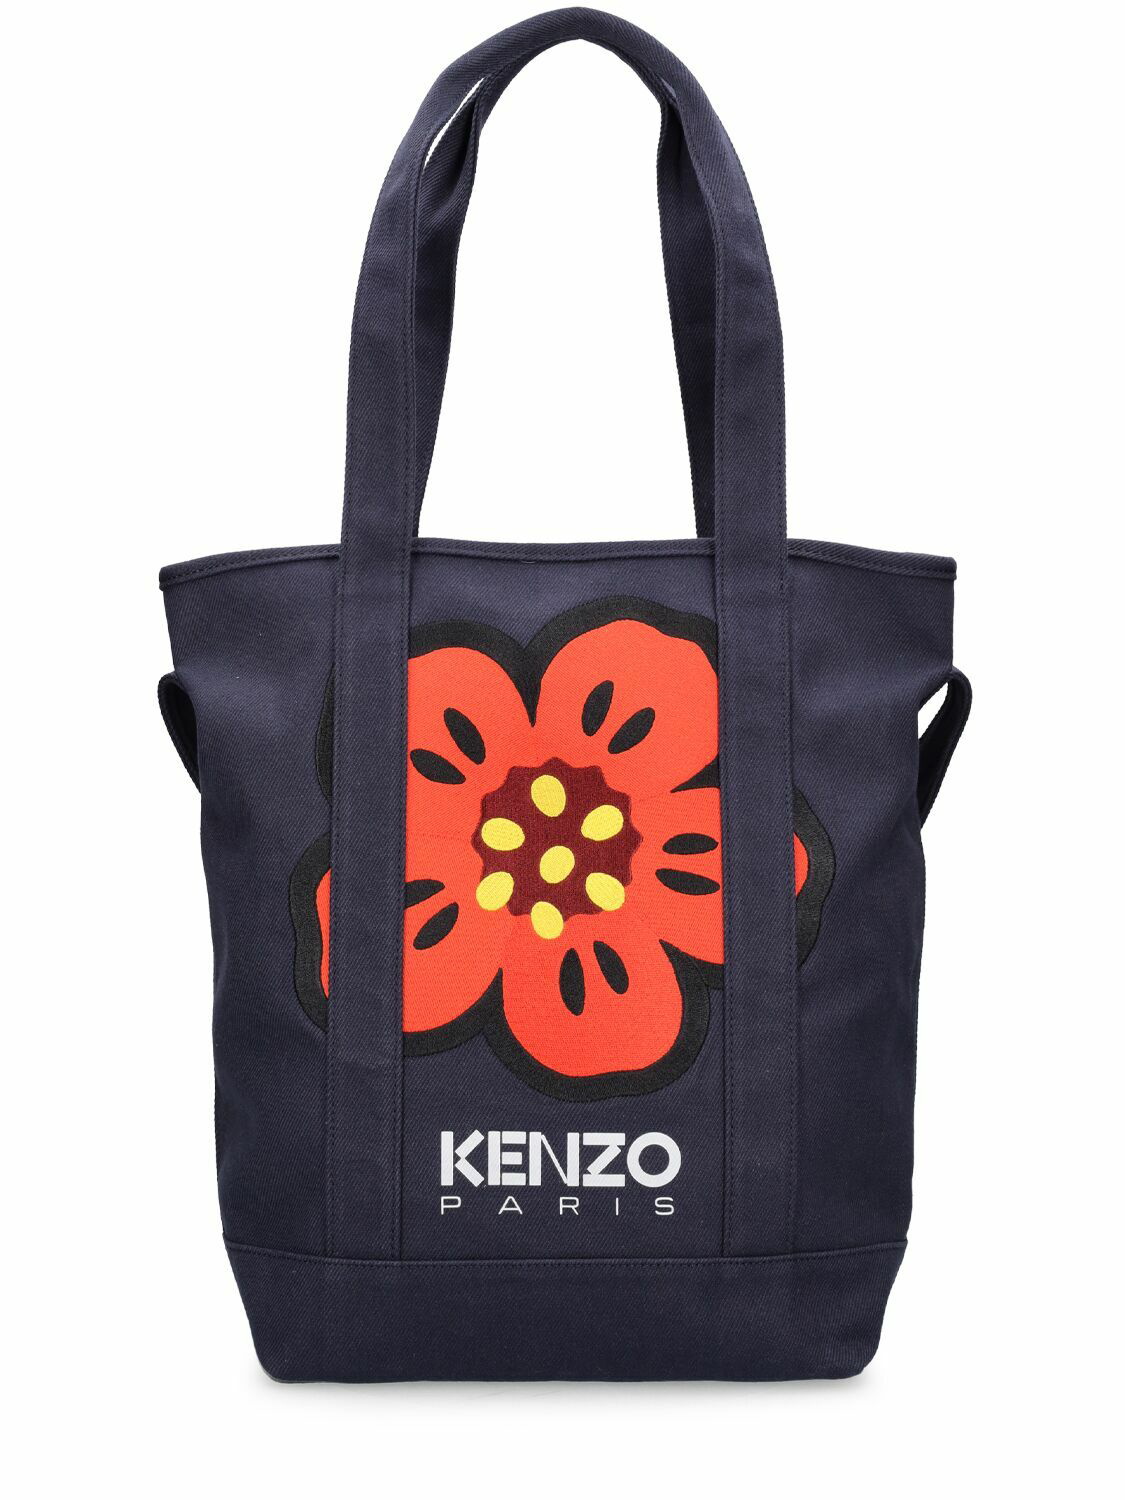 KENZO PARIS - Group Boke Embroidered Utility Tote Bag Kenzo